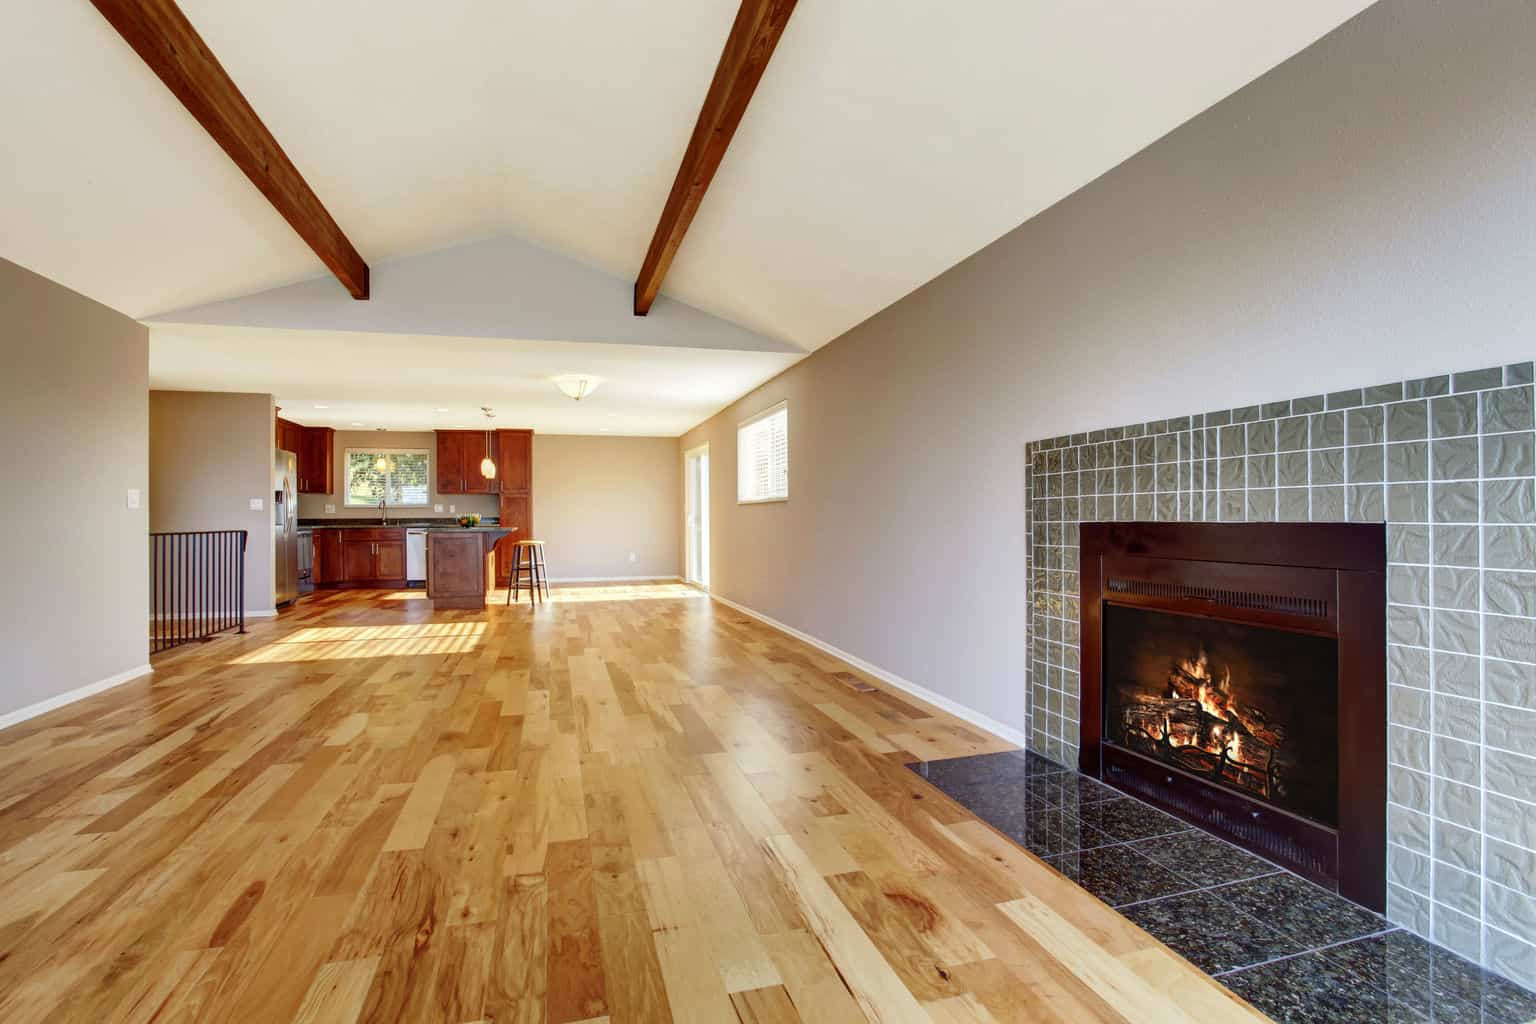 DIY Refinish Hardwood Floors
 Refinishing Hardwood Pine Flooring A How To DIY Guide